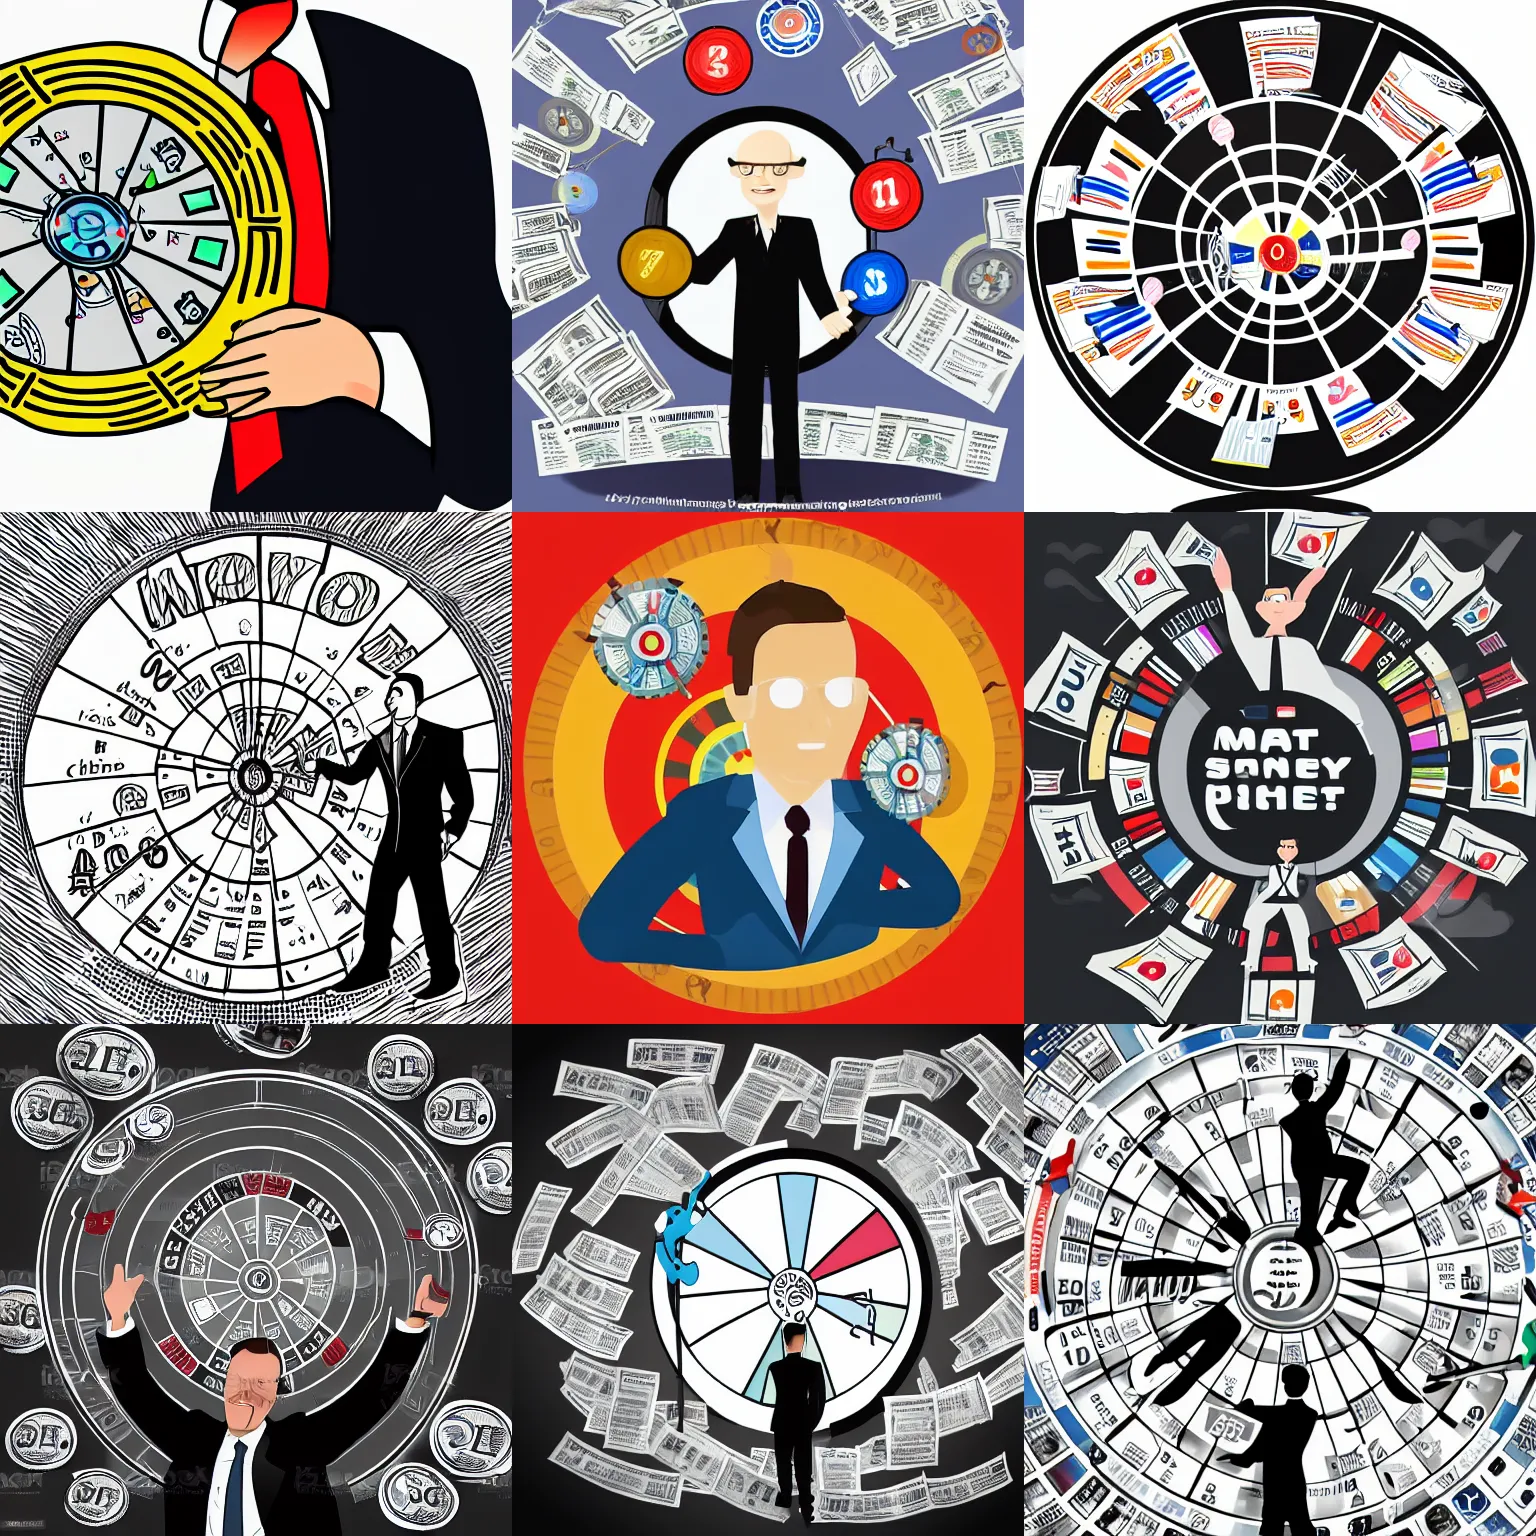 Prompt: man wearing suit spinning price wheel, money, cartoon,newspaper illustration , caricature, b&w, jet fighter background